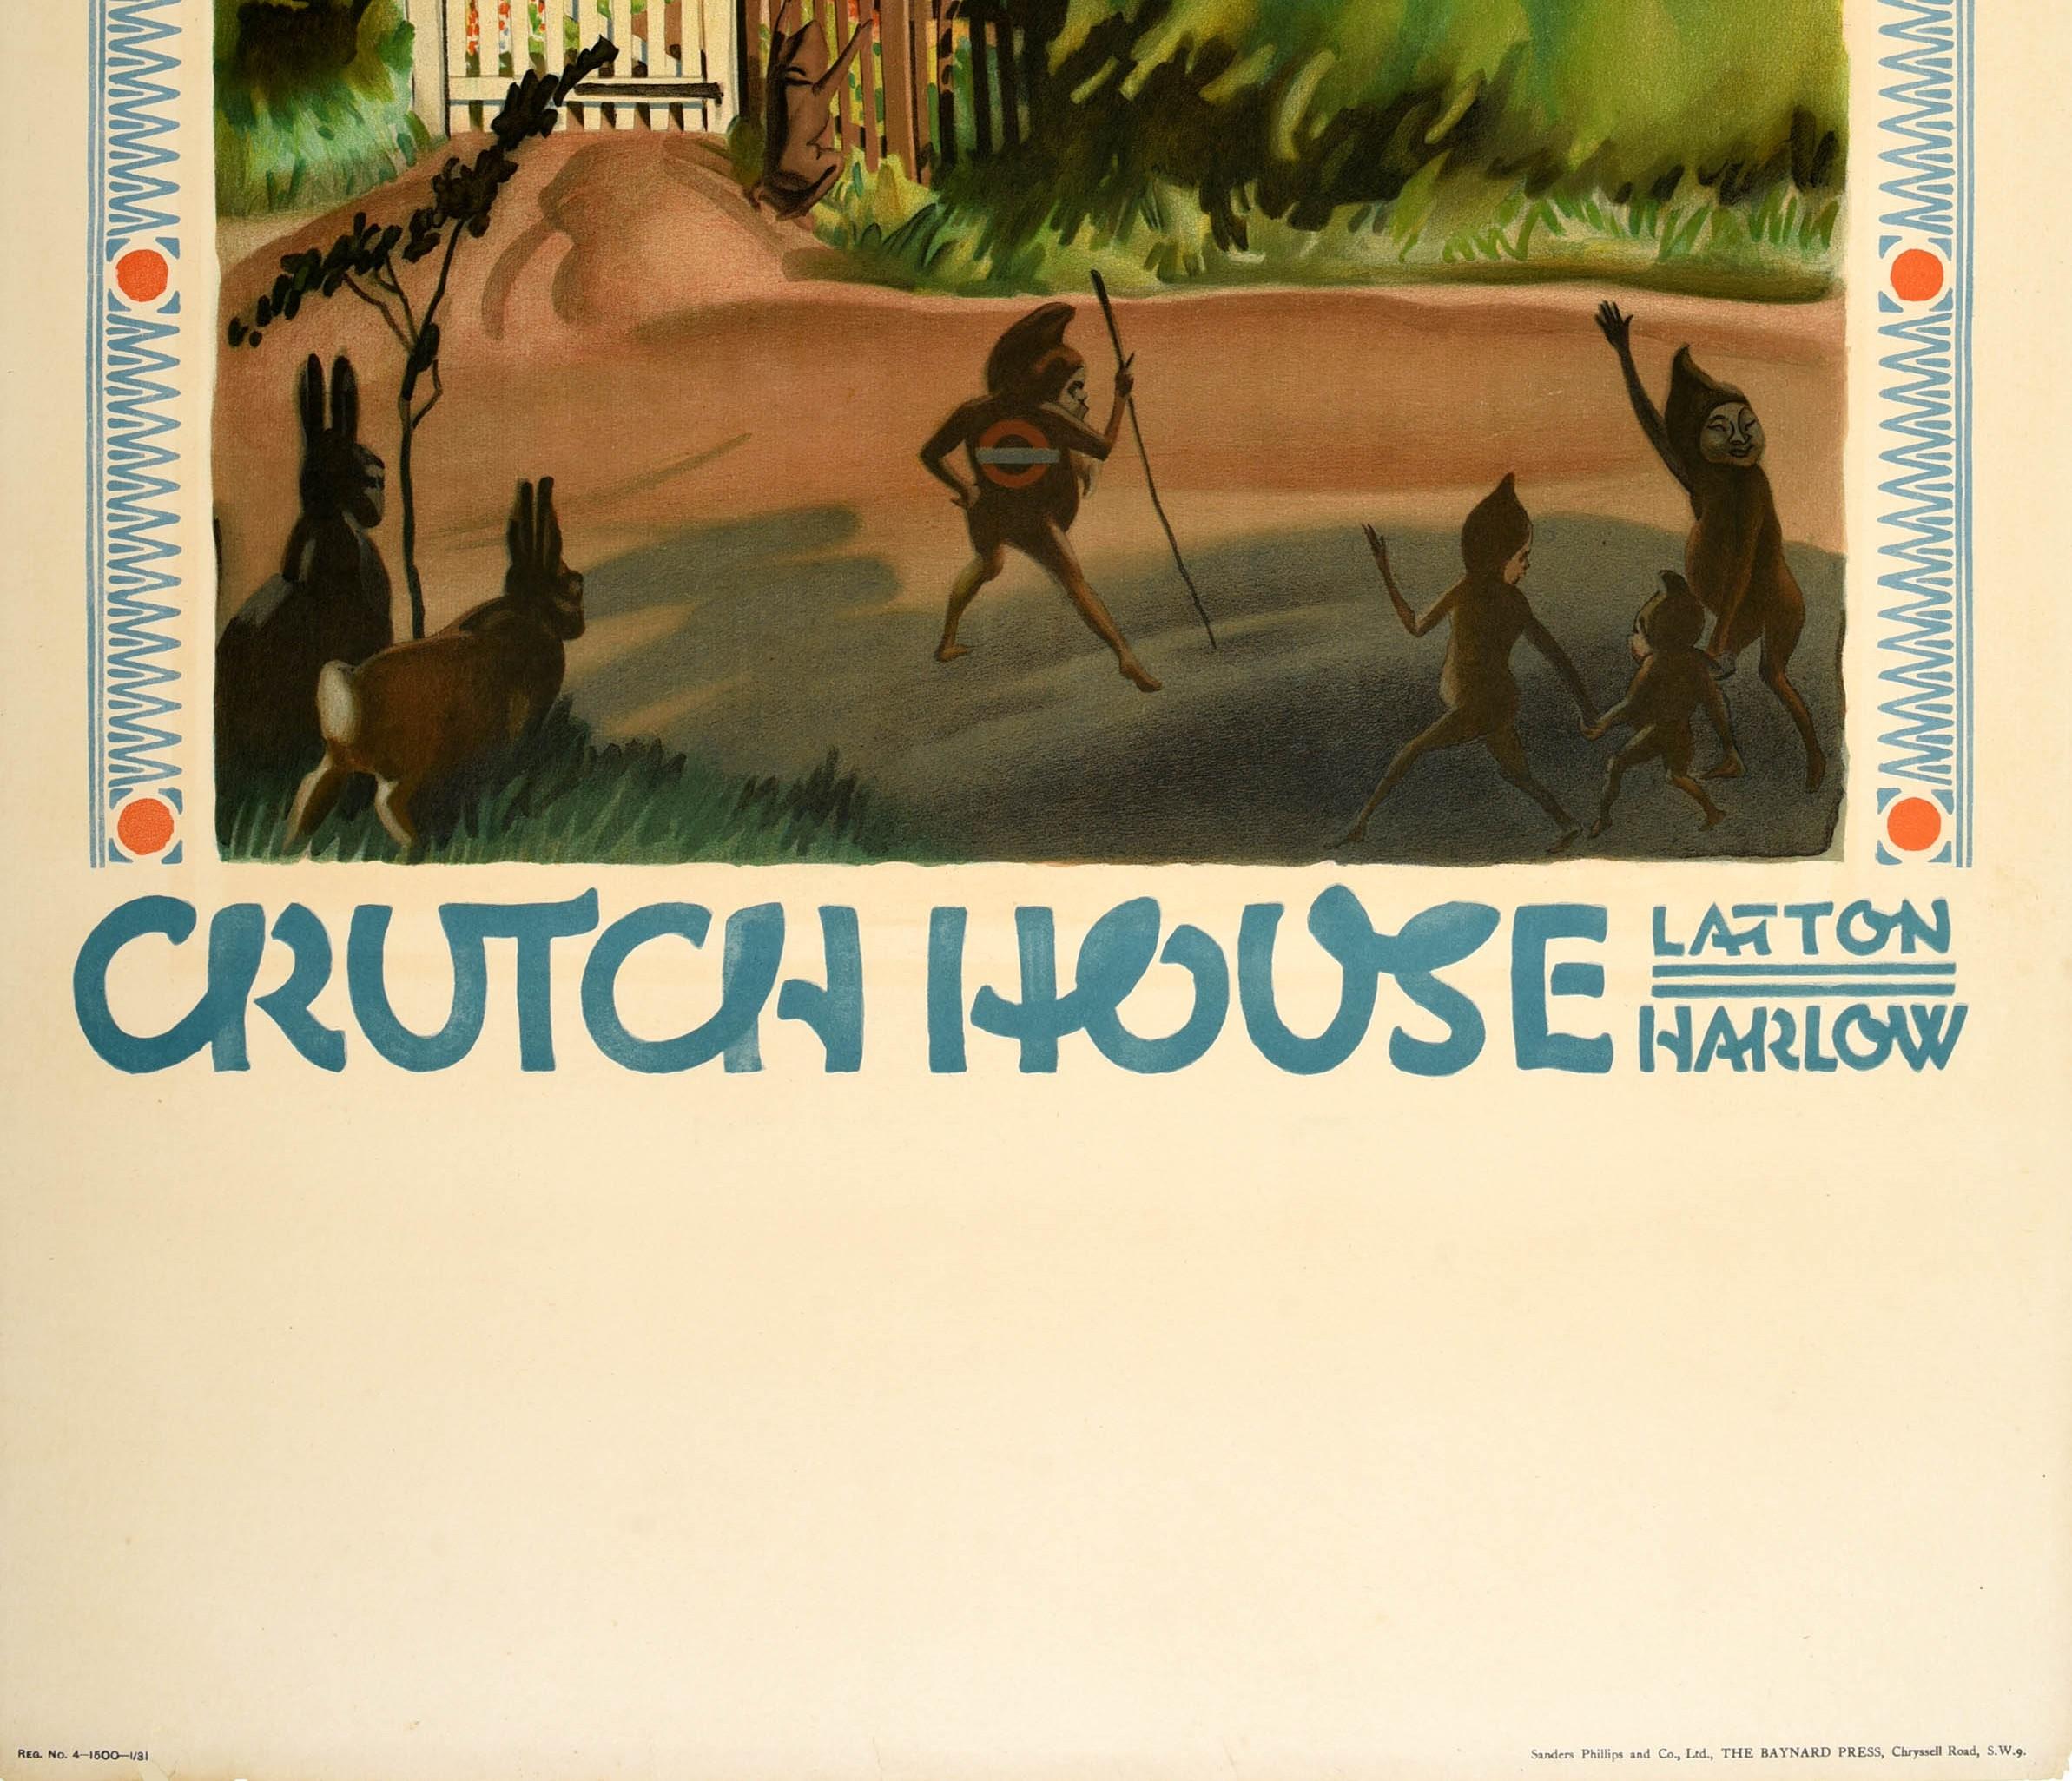 Mid-20th Century Original Vintage London Transport Travel Poster Crutch House Latton Harlow Pixie For Sale